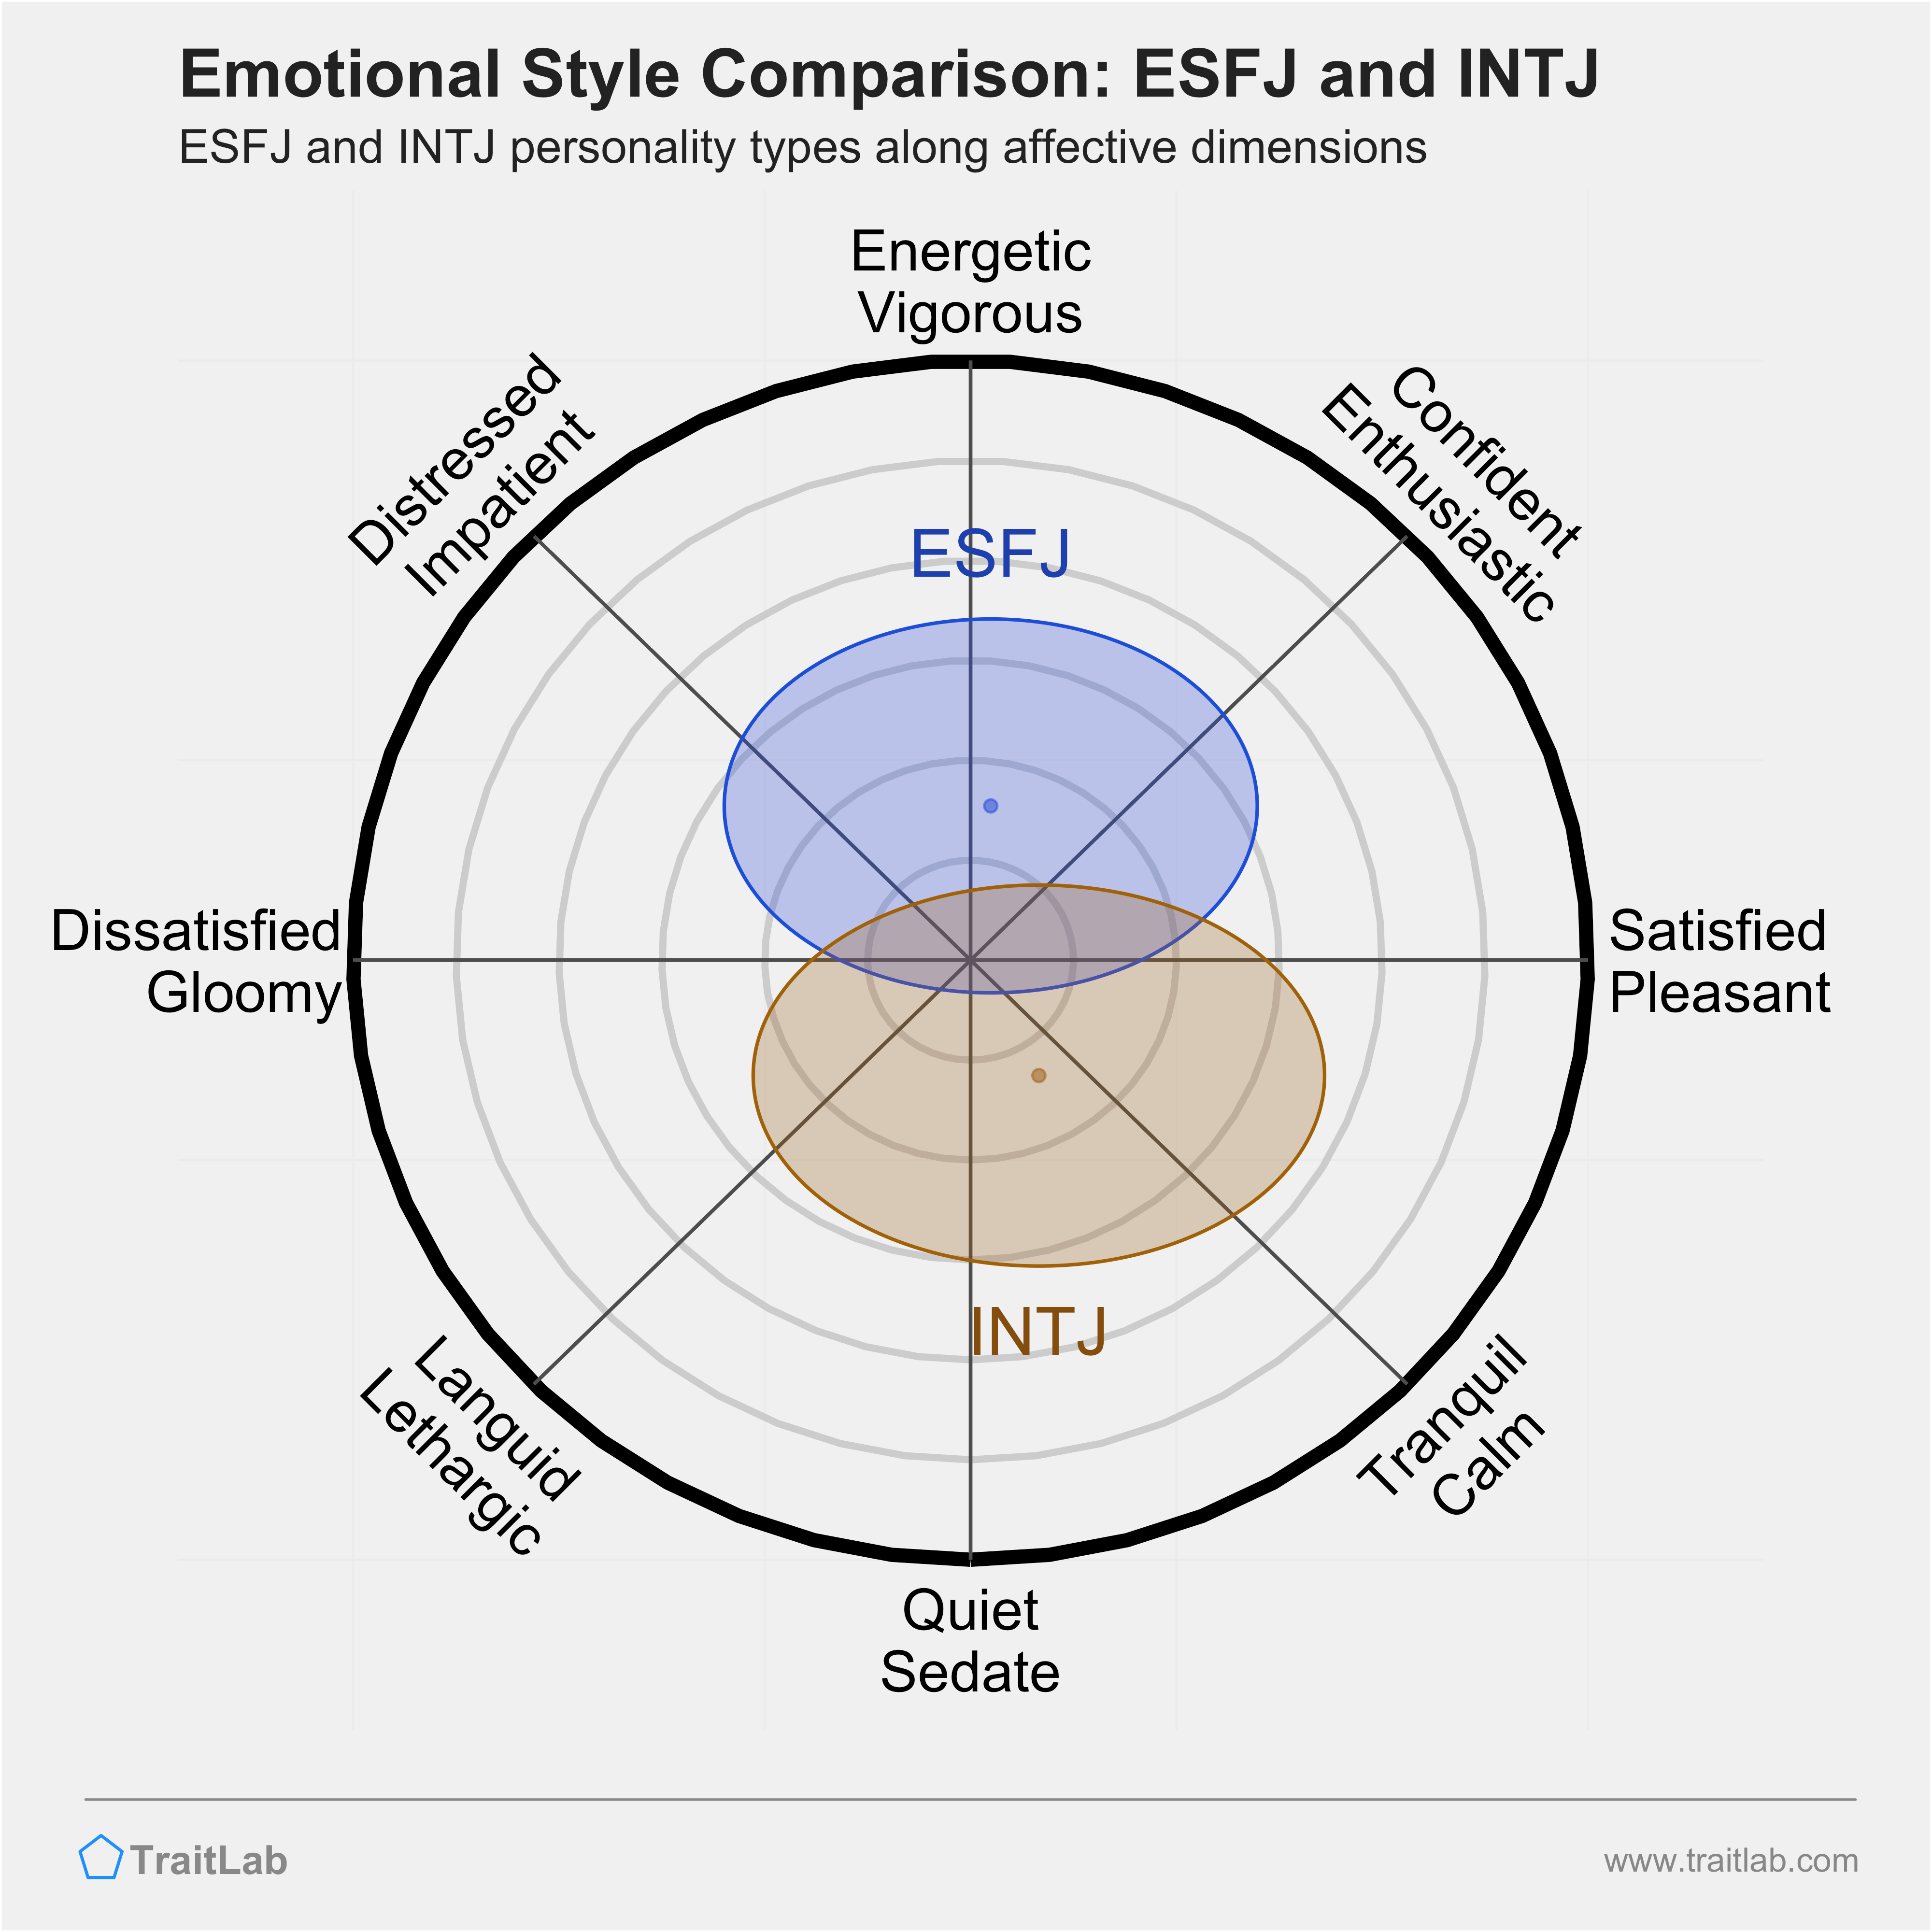 ESFJ and INTJ comparison across emotional (affective) dimensions